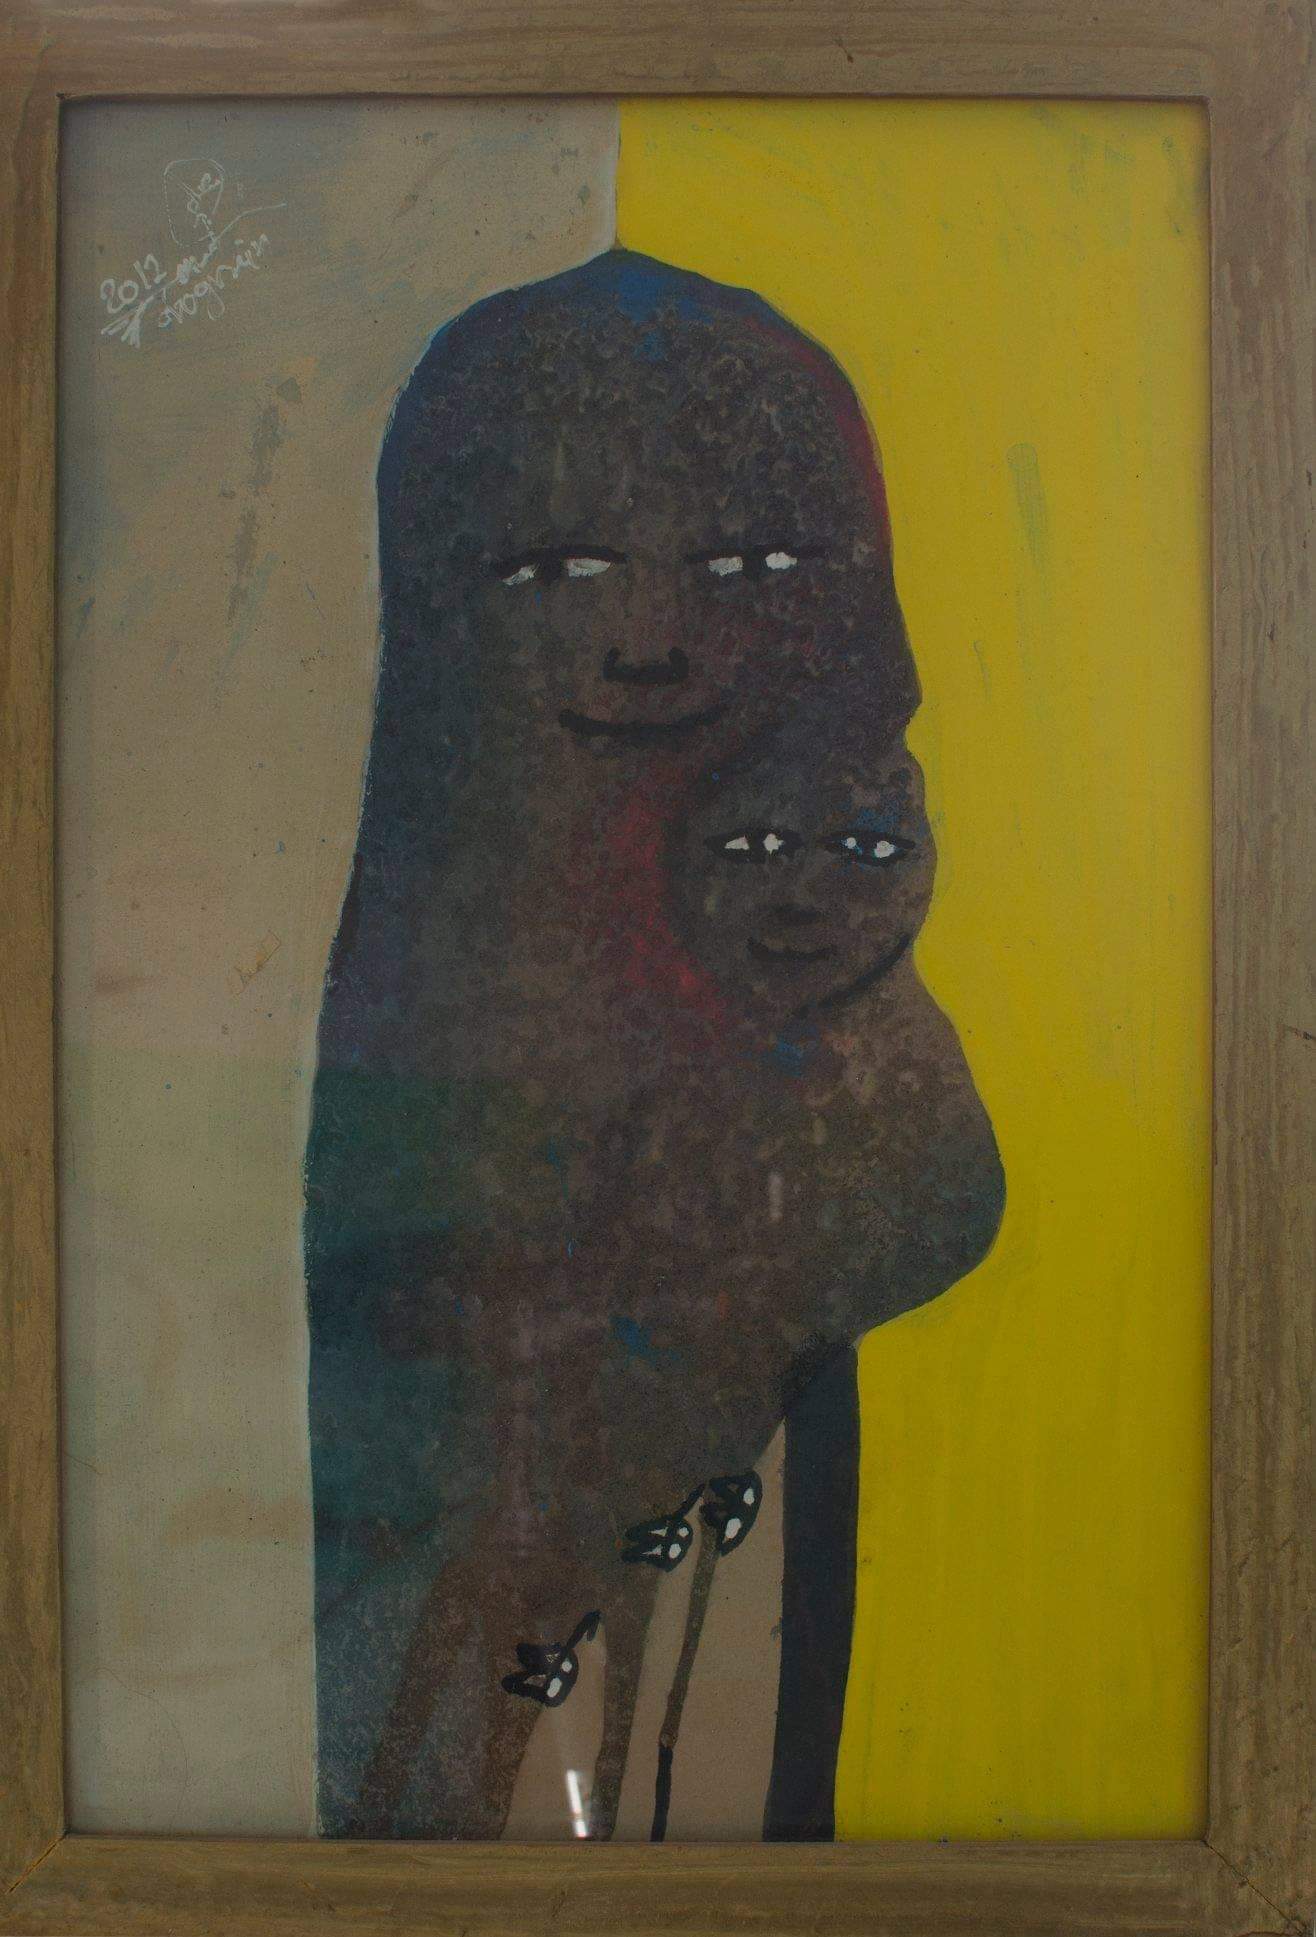 EMAD ABU GRAIN / Untitled / 37 x 53 cm / Mixed media on cardboard  / LE 5,000 / USD 320 / PALESTINE-120